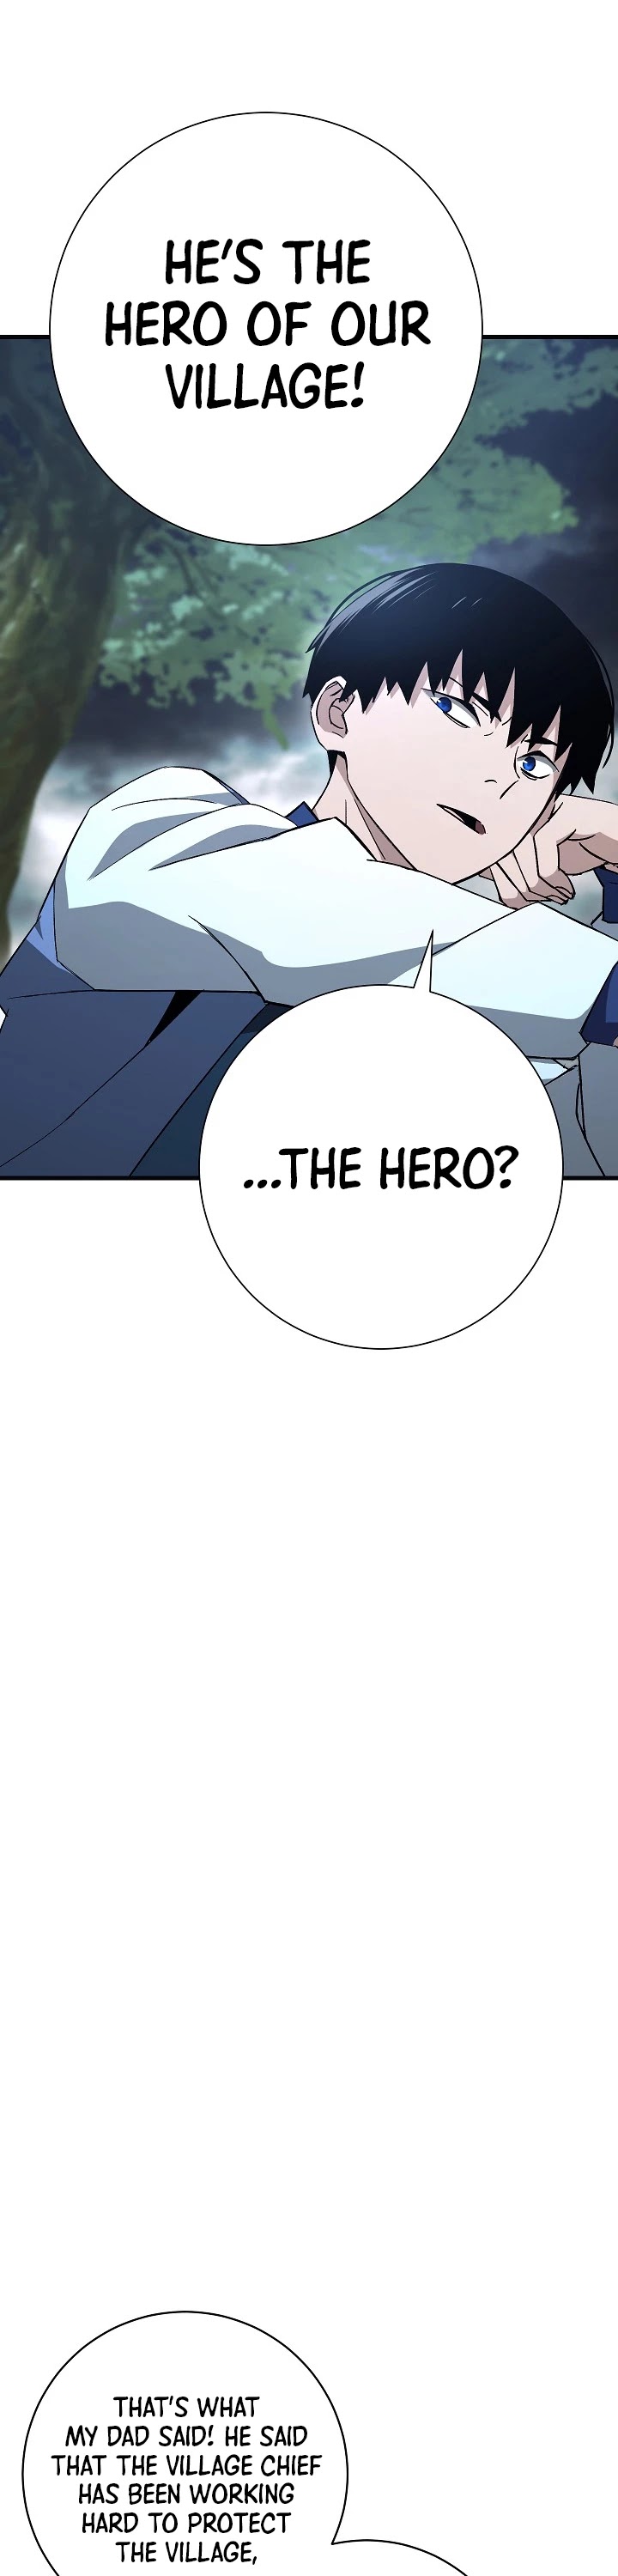 The Hero Returns manga, read The Hero Returns, The Hero Returns anime, read The Hero Returns manga